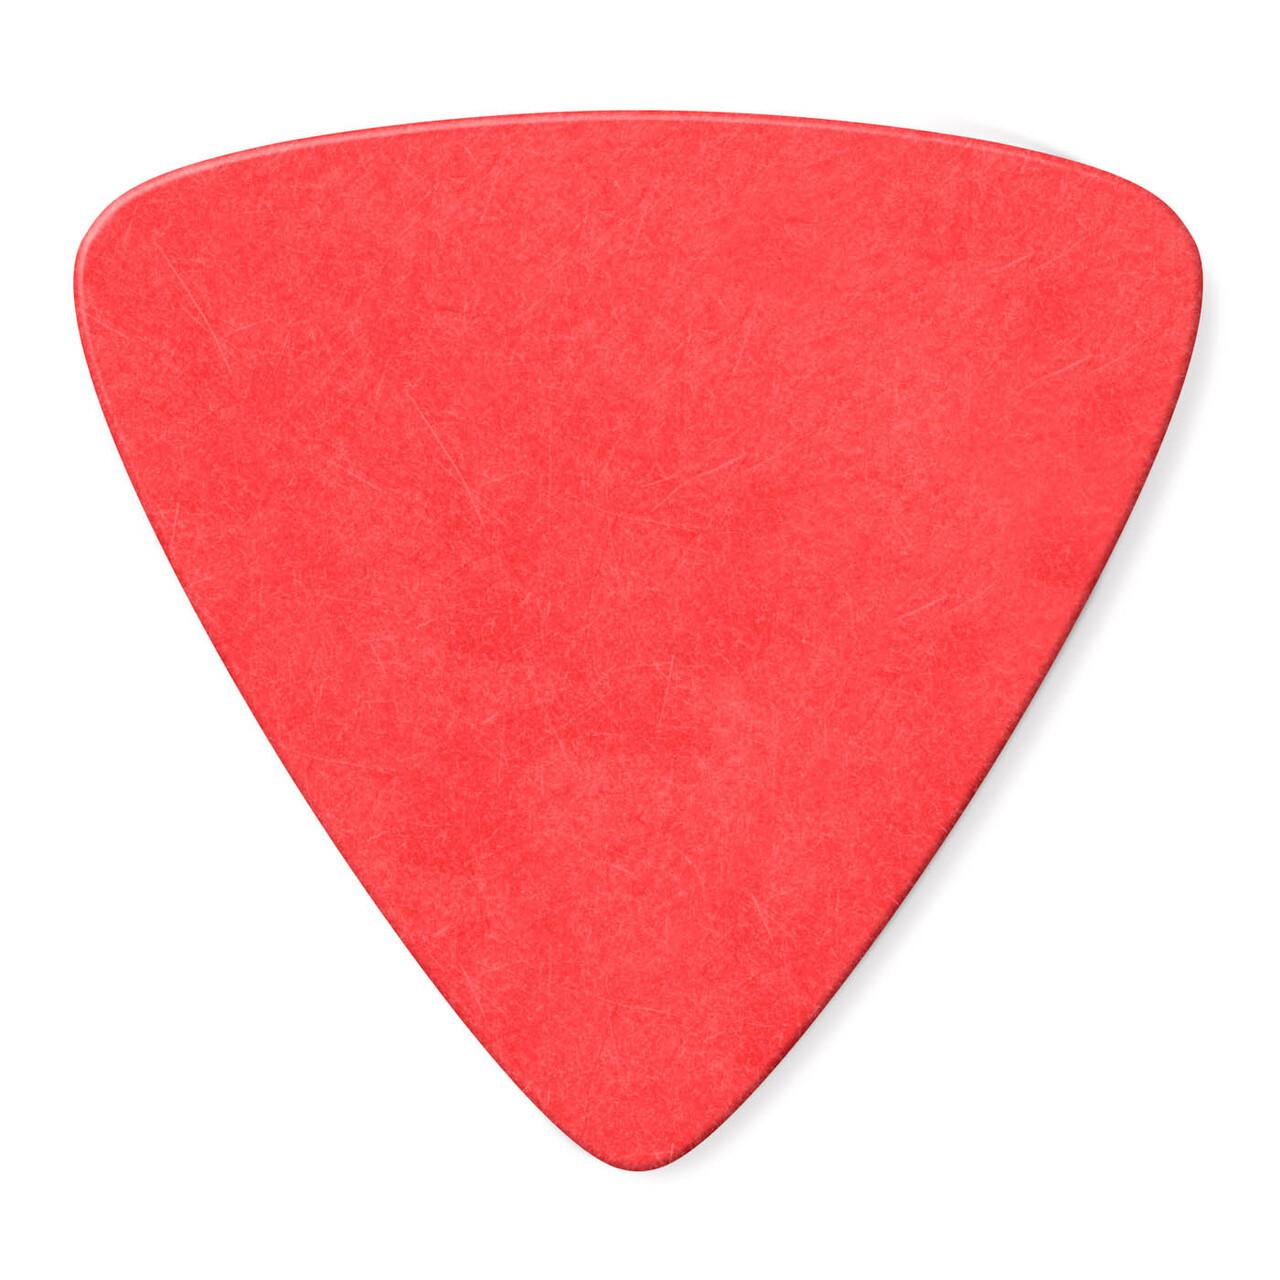 Dunlop - 6 Plumillas Tortex Triángulo, CaliPre: .50 Color: Rojo Mod.431P.50_16